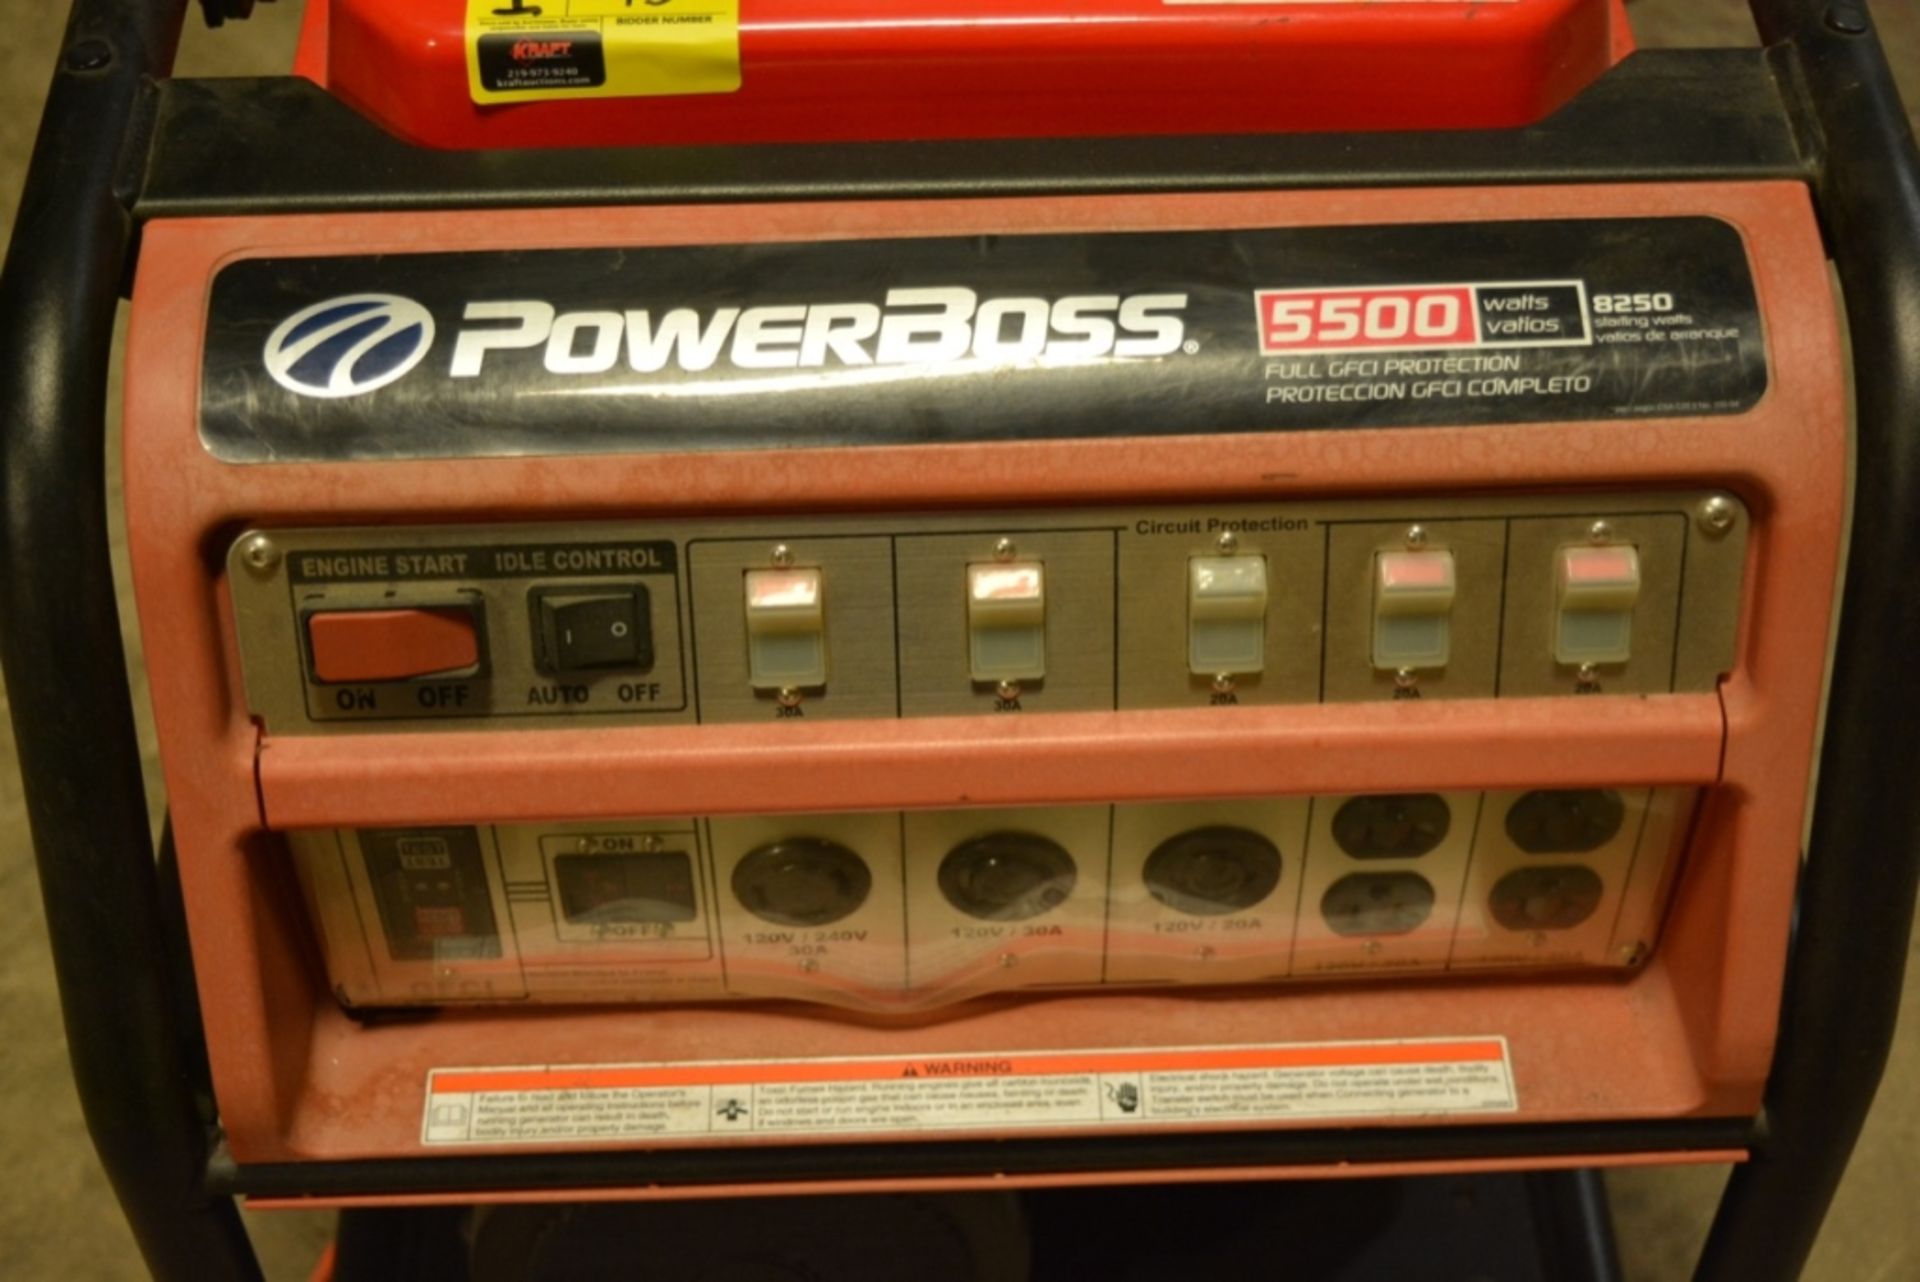 Power Boss 5500 Portable Generator Store Display - Image 2 of 3